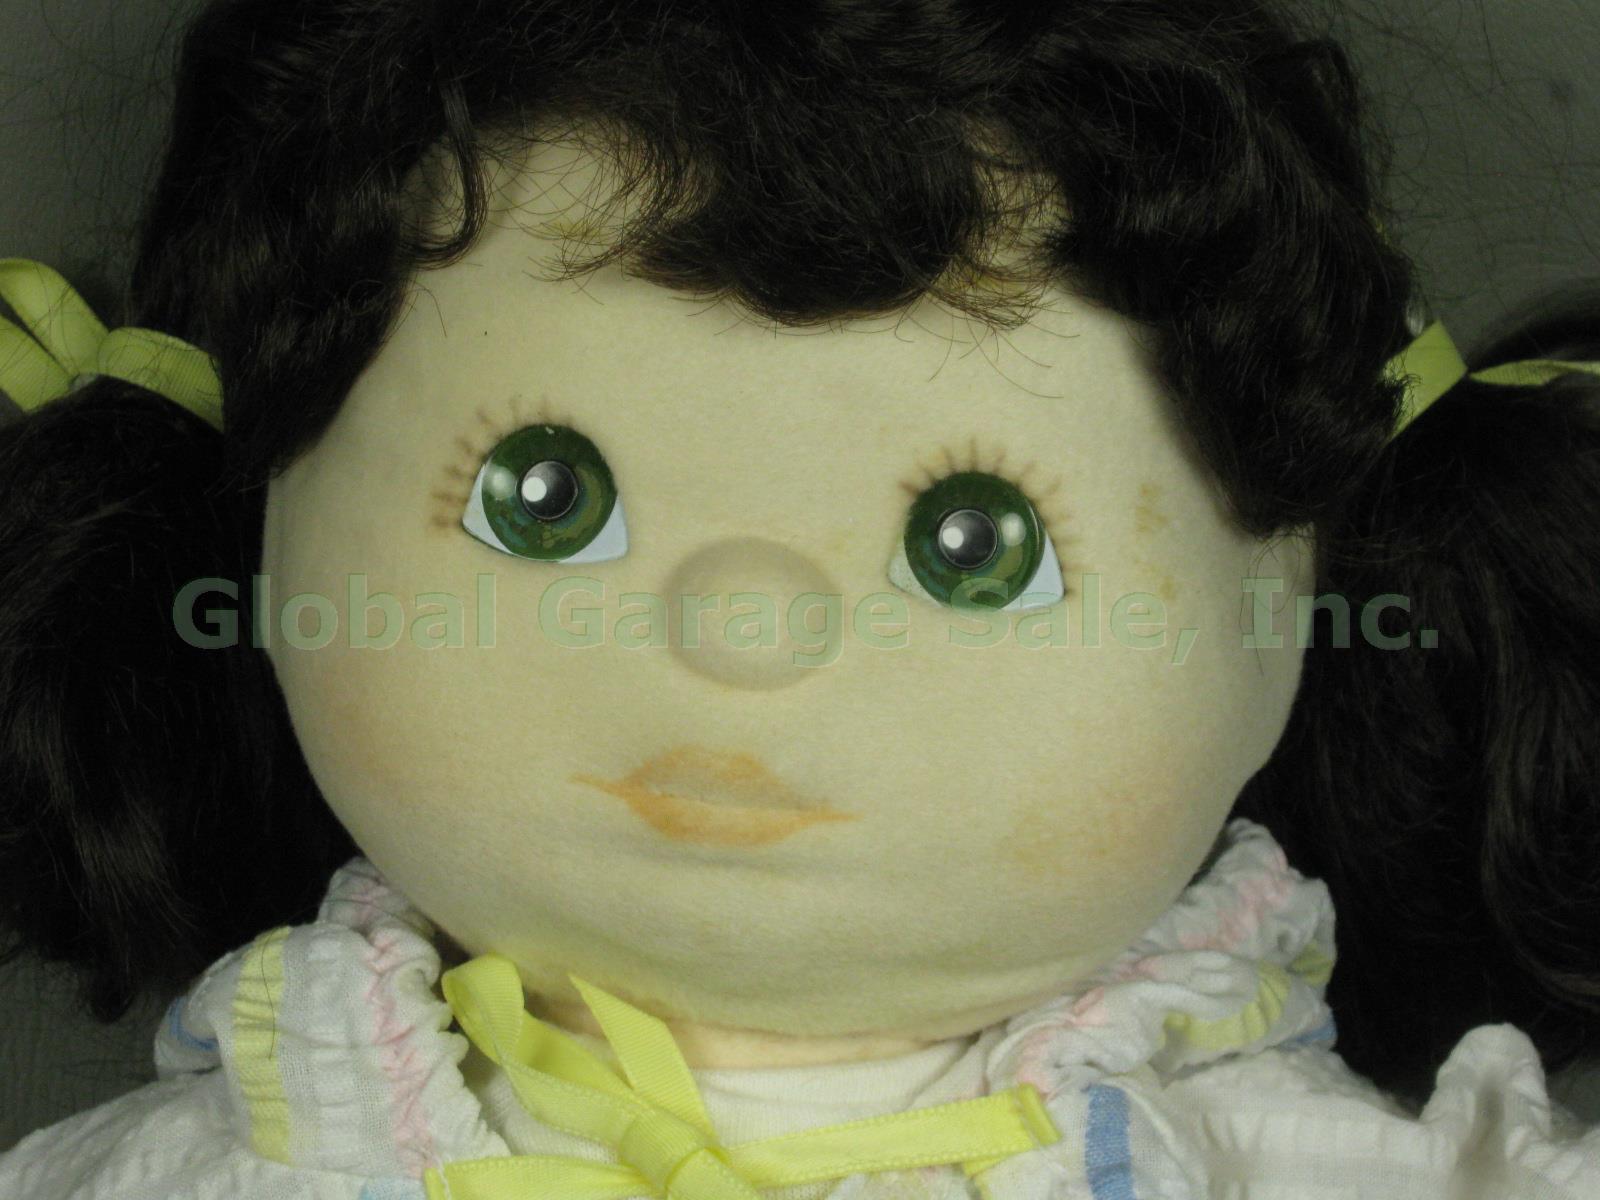 Vtg 1985 Mattel Brunette My Child Doll W/ Green Eyes Brown Hair Outfit + Book NR 1